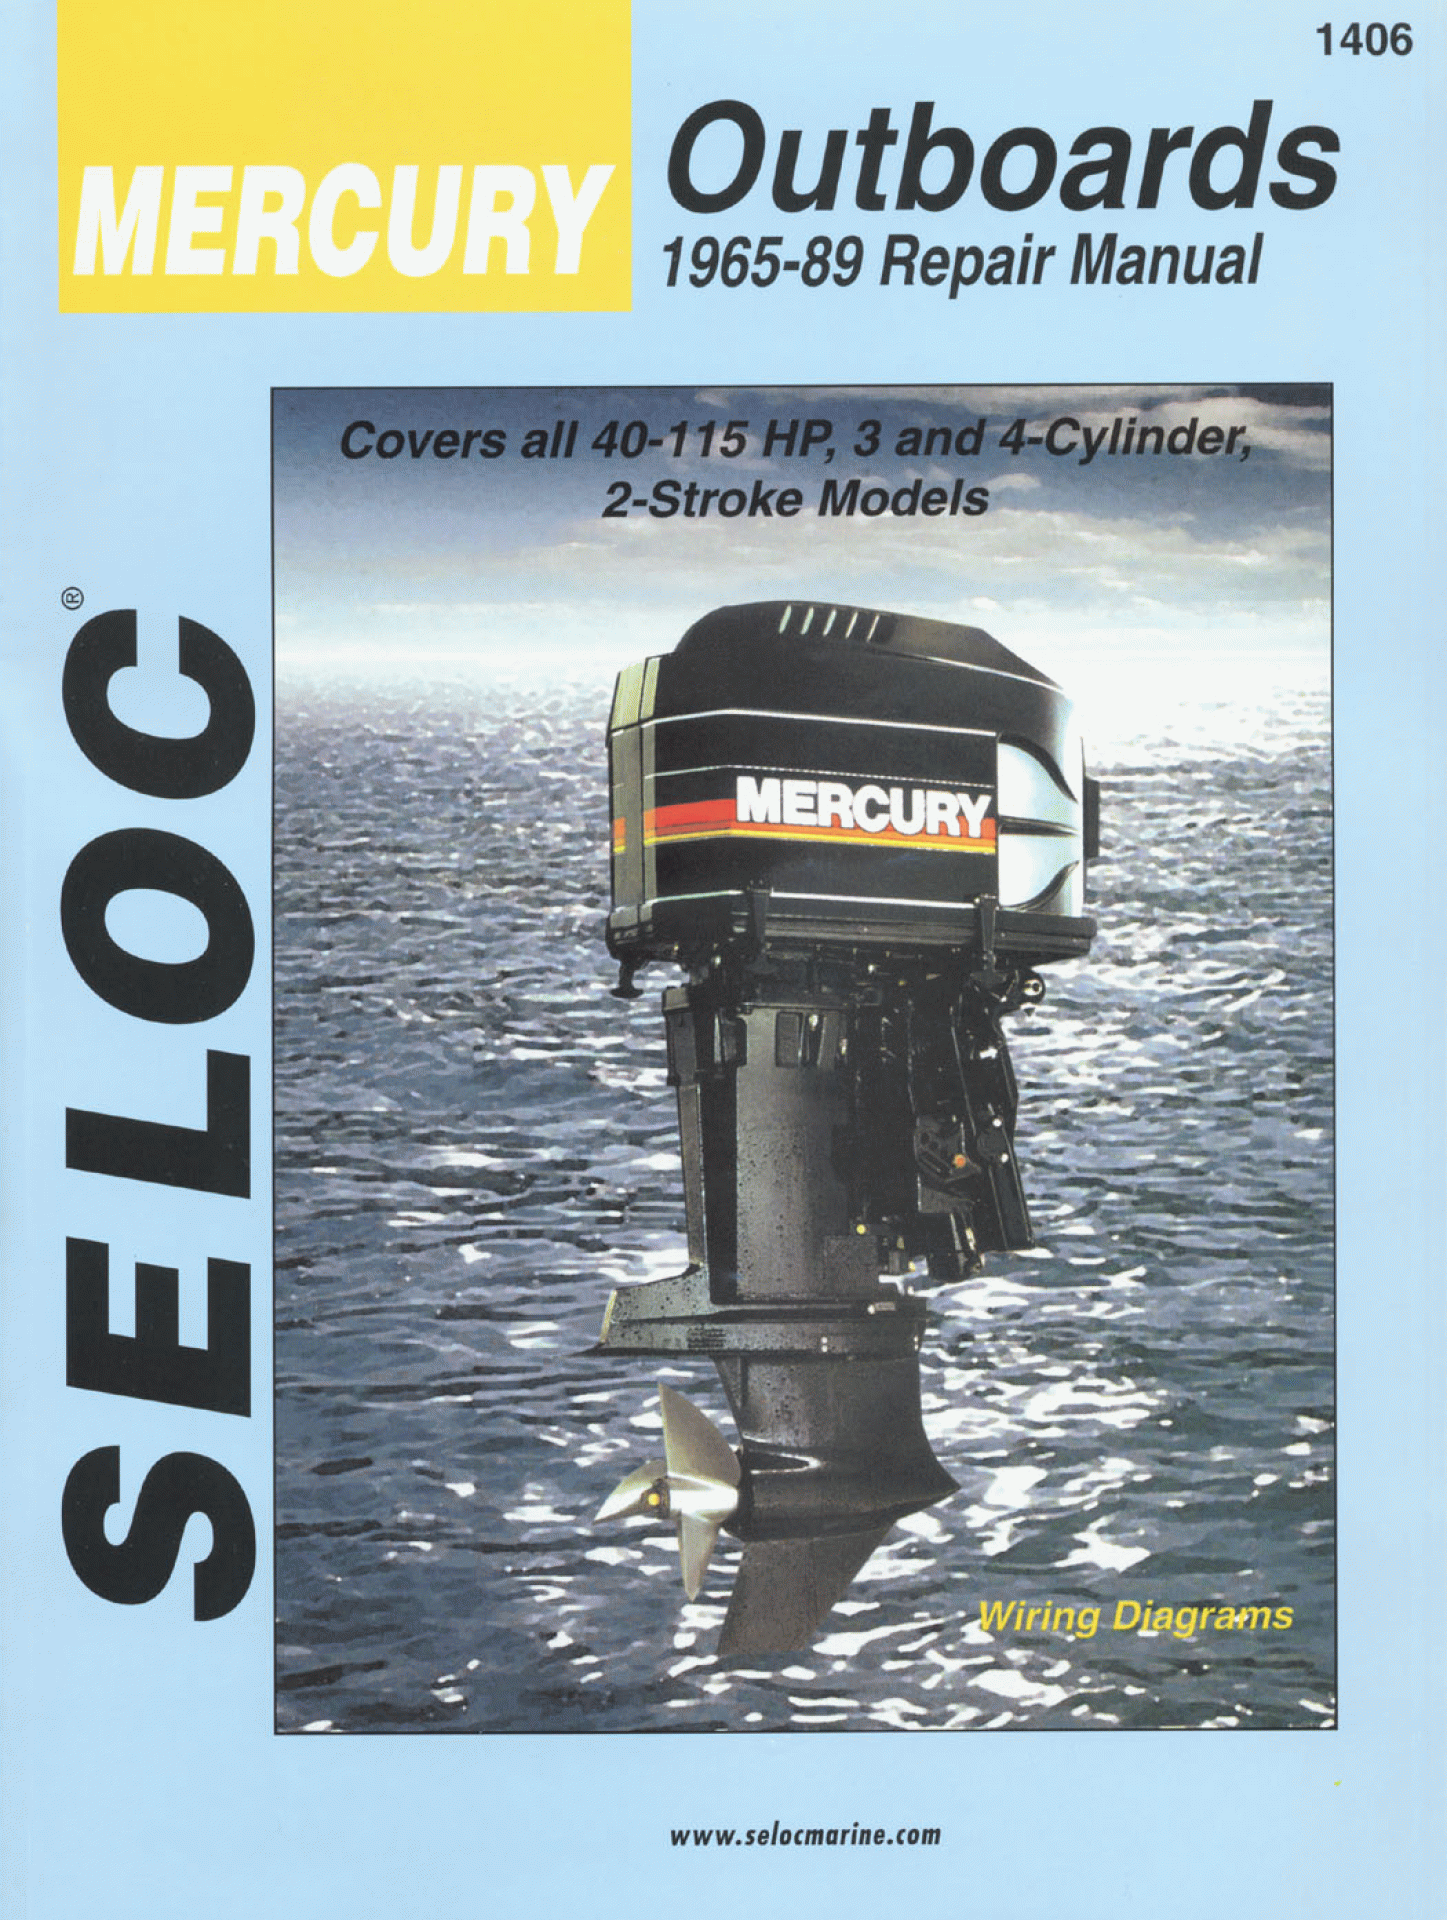 SELOC PUBLISHING | 18-01406 | REPAIR MANUAL Mercury Outboards 3-4 Cyl 1965-89